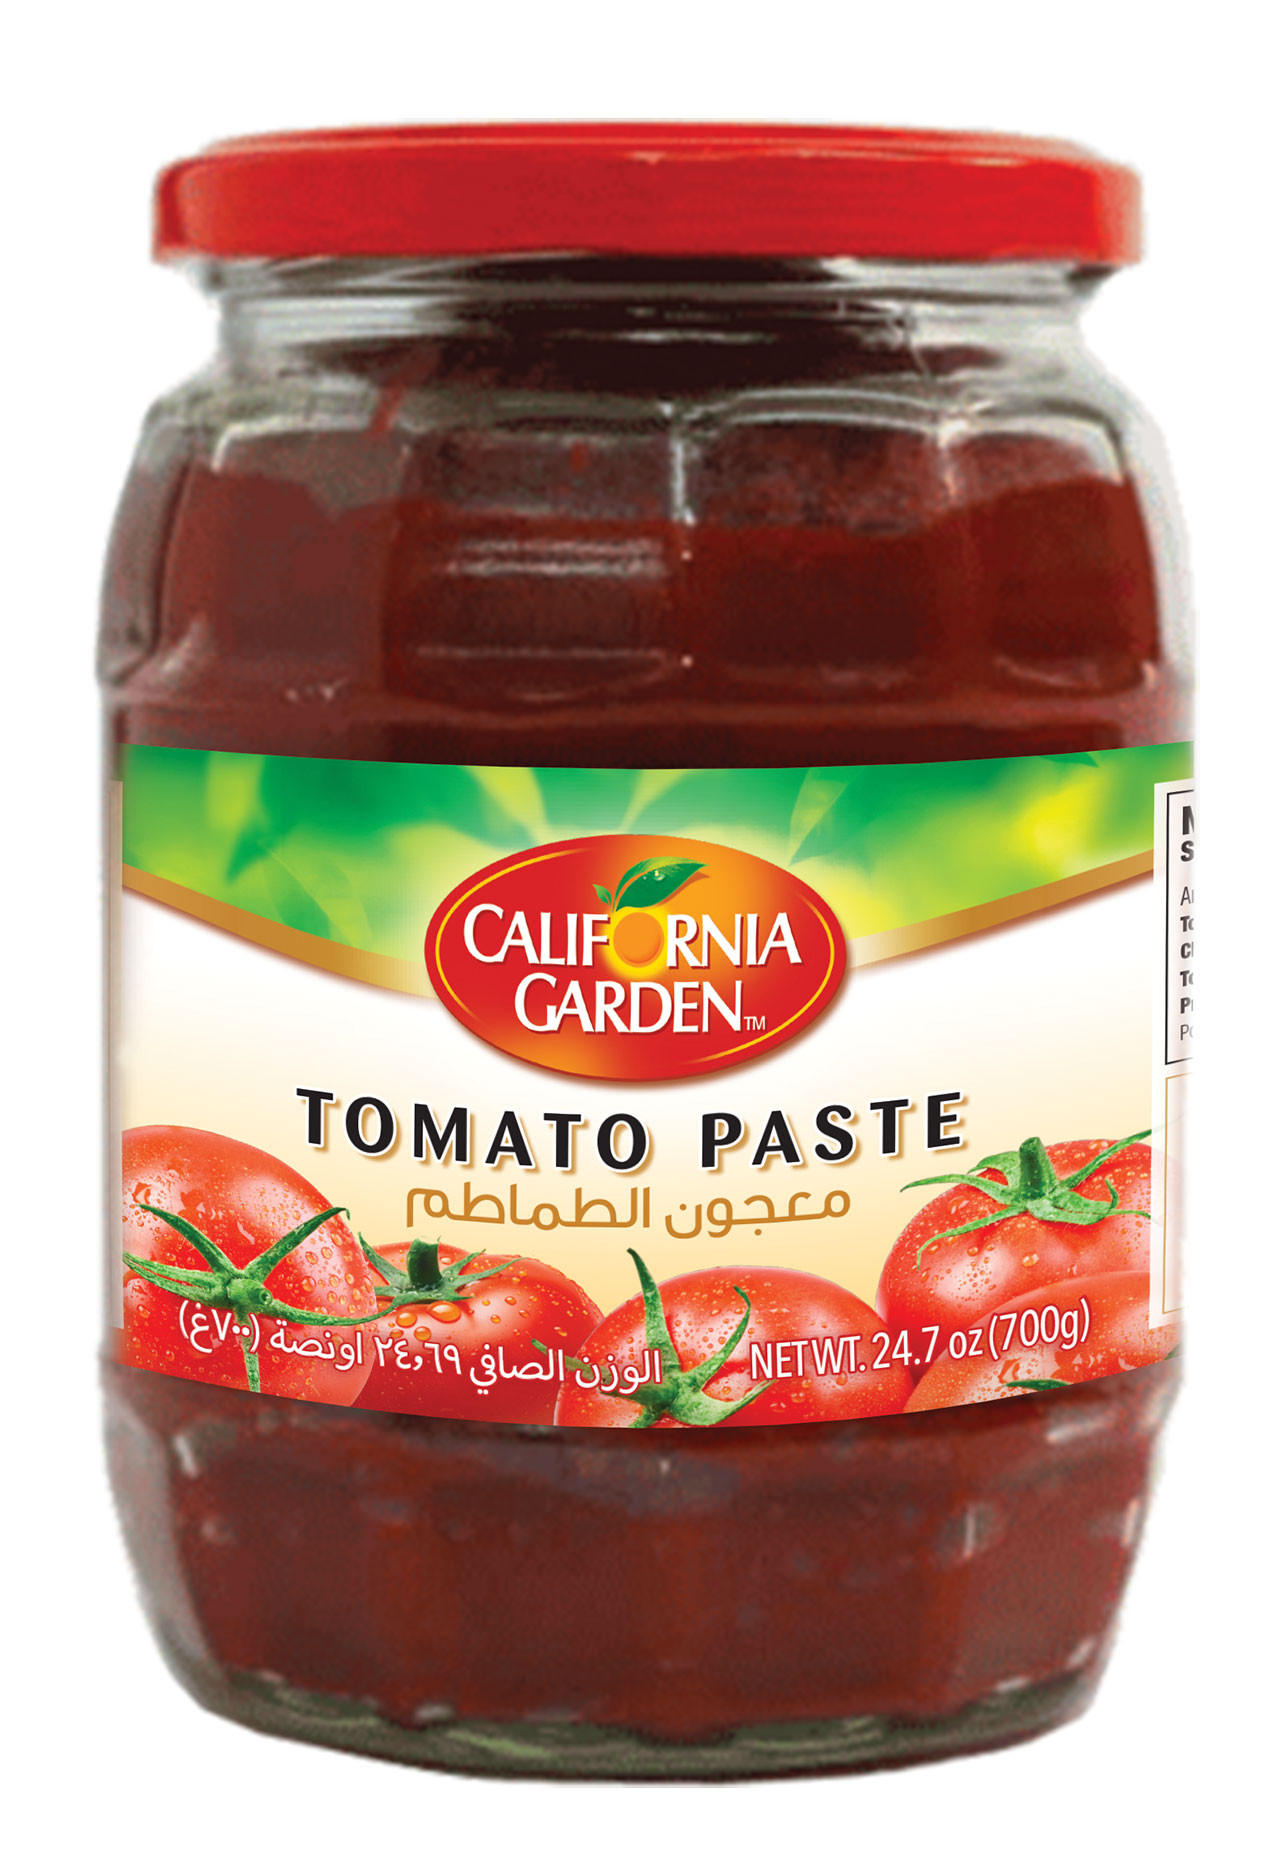 Tomato Sauce From Tomato Paste
 Tomato Paste in Jars – California Garden